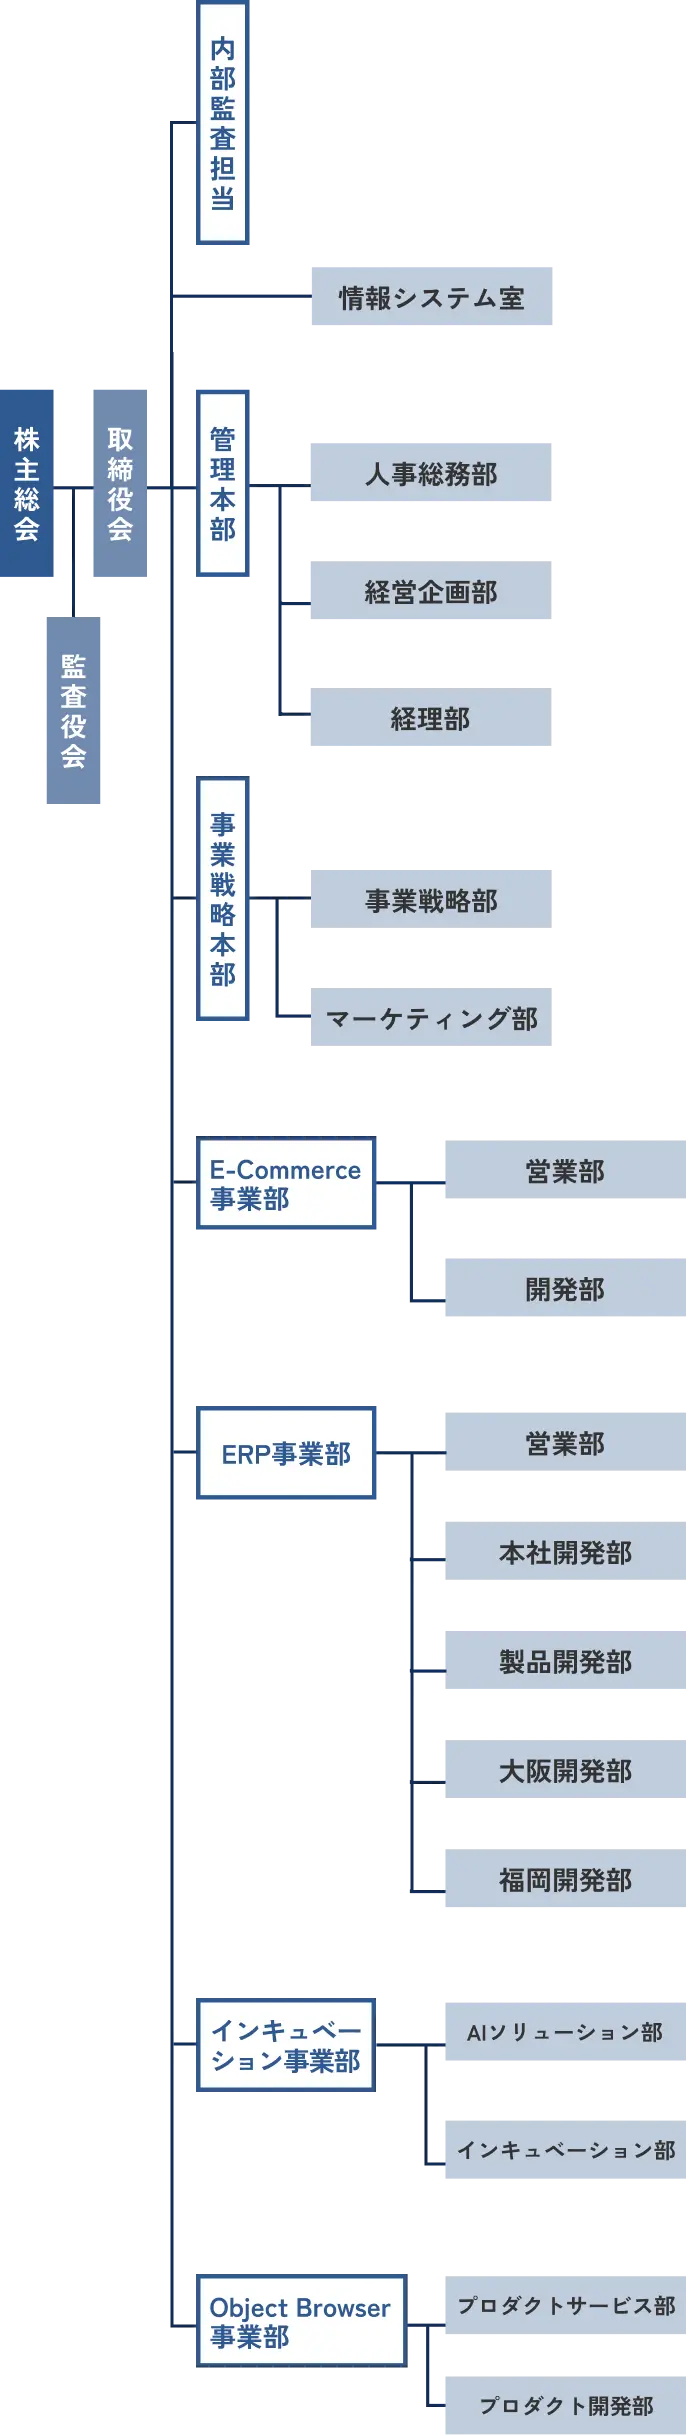 organization_chart_sp